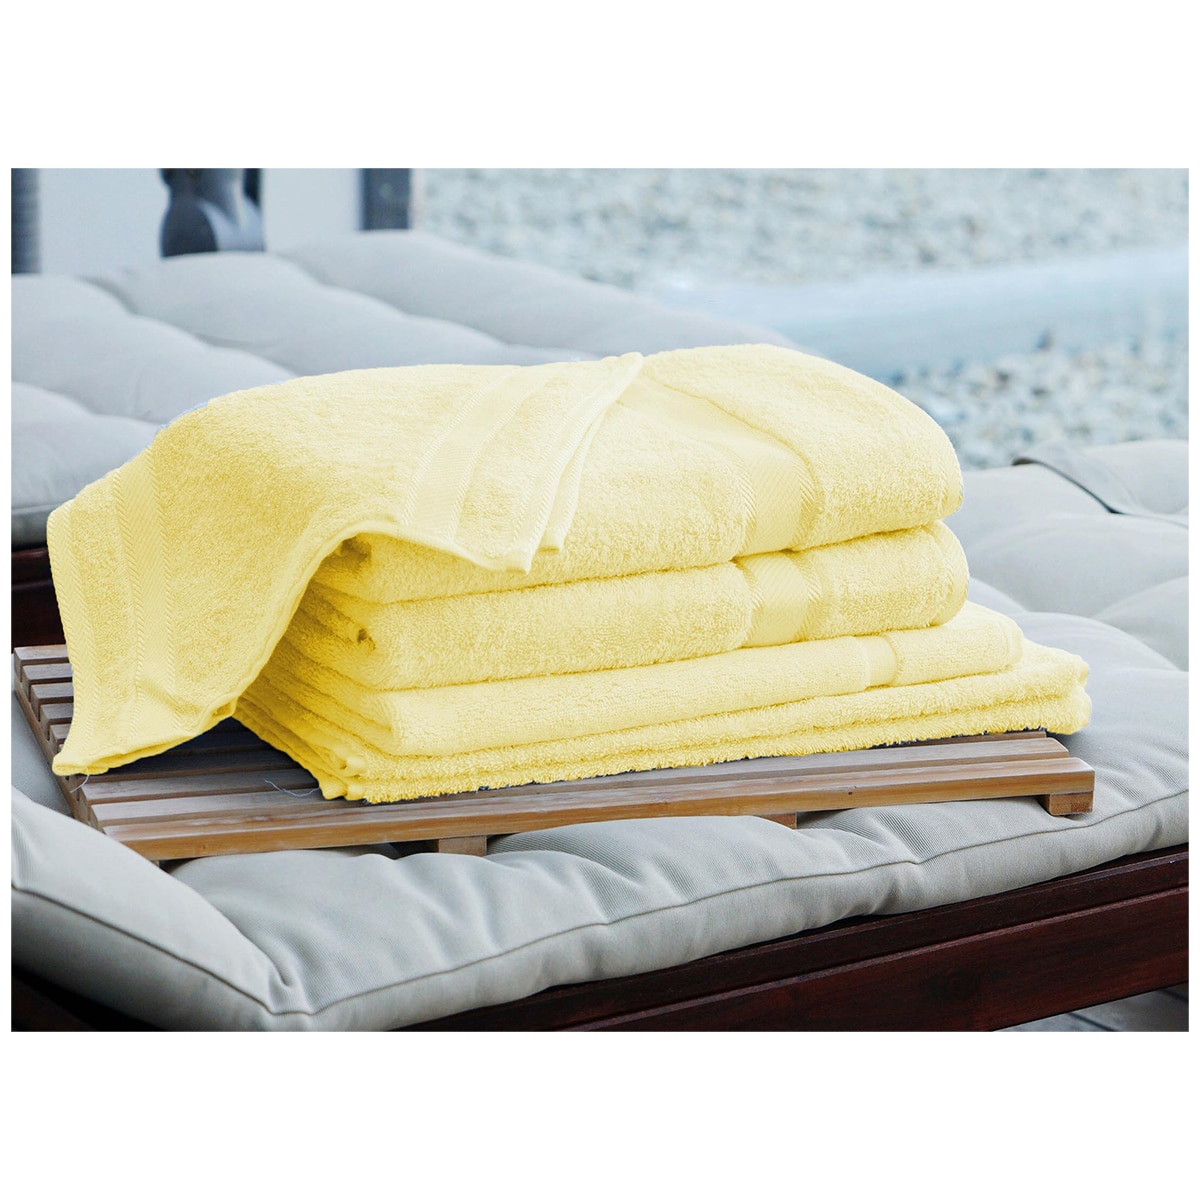 Kingtex Plain dyed 100% Combed Cotton towel range 550gsm Bath Sheet set 7 piece - Yellow